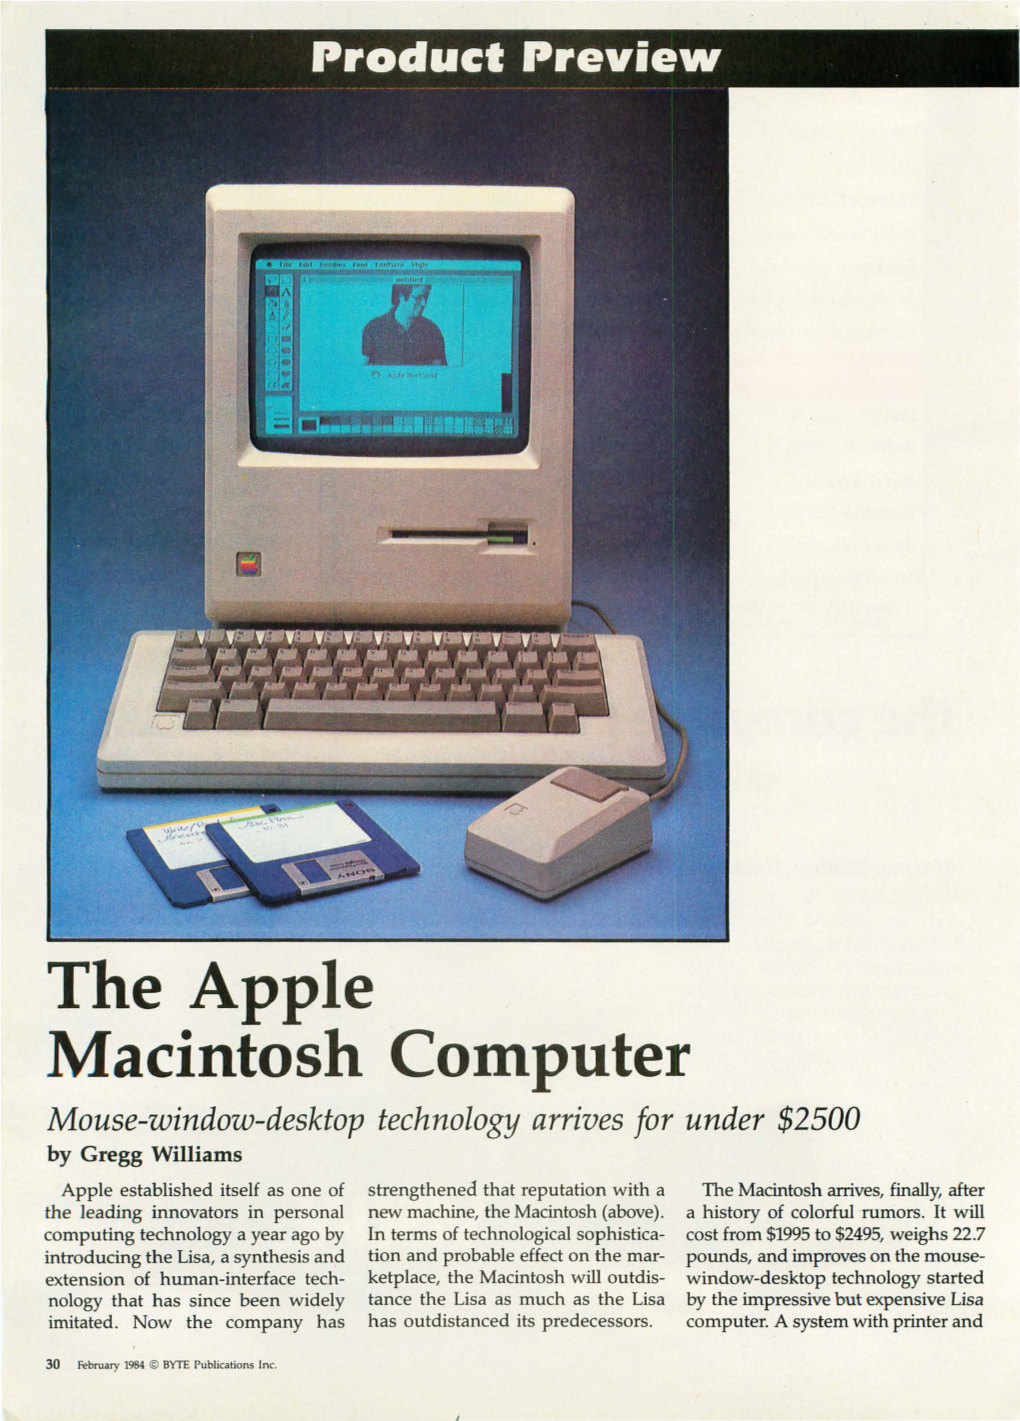 The Apple Macintosh Computer, February 1984, BYTE Magazine